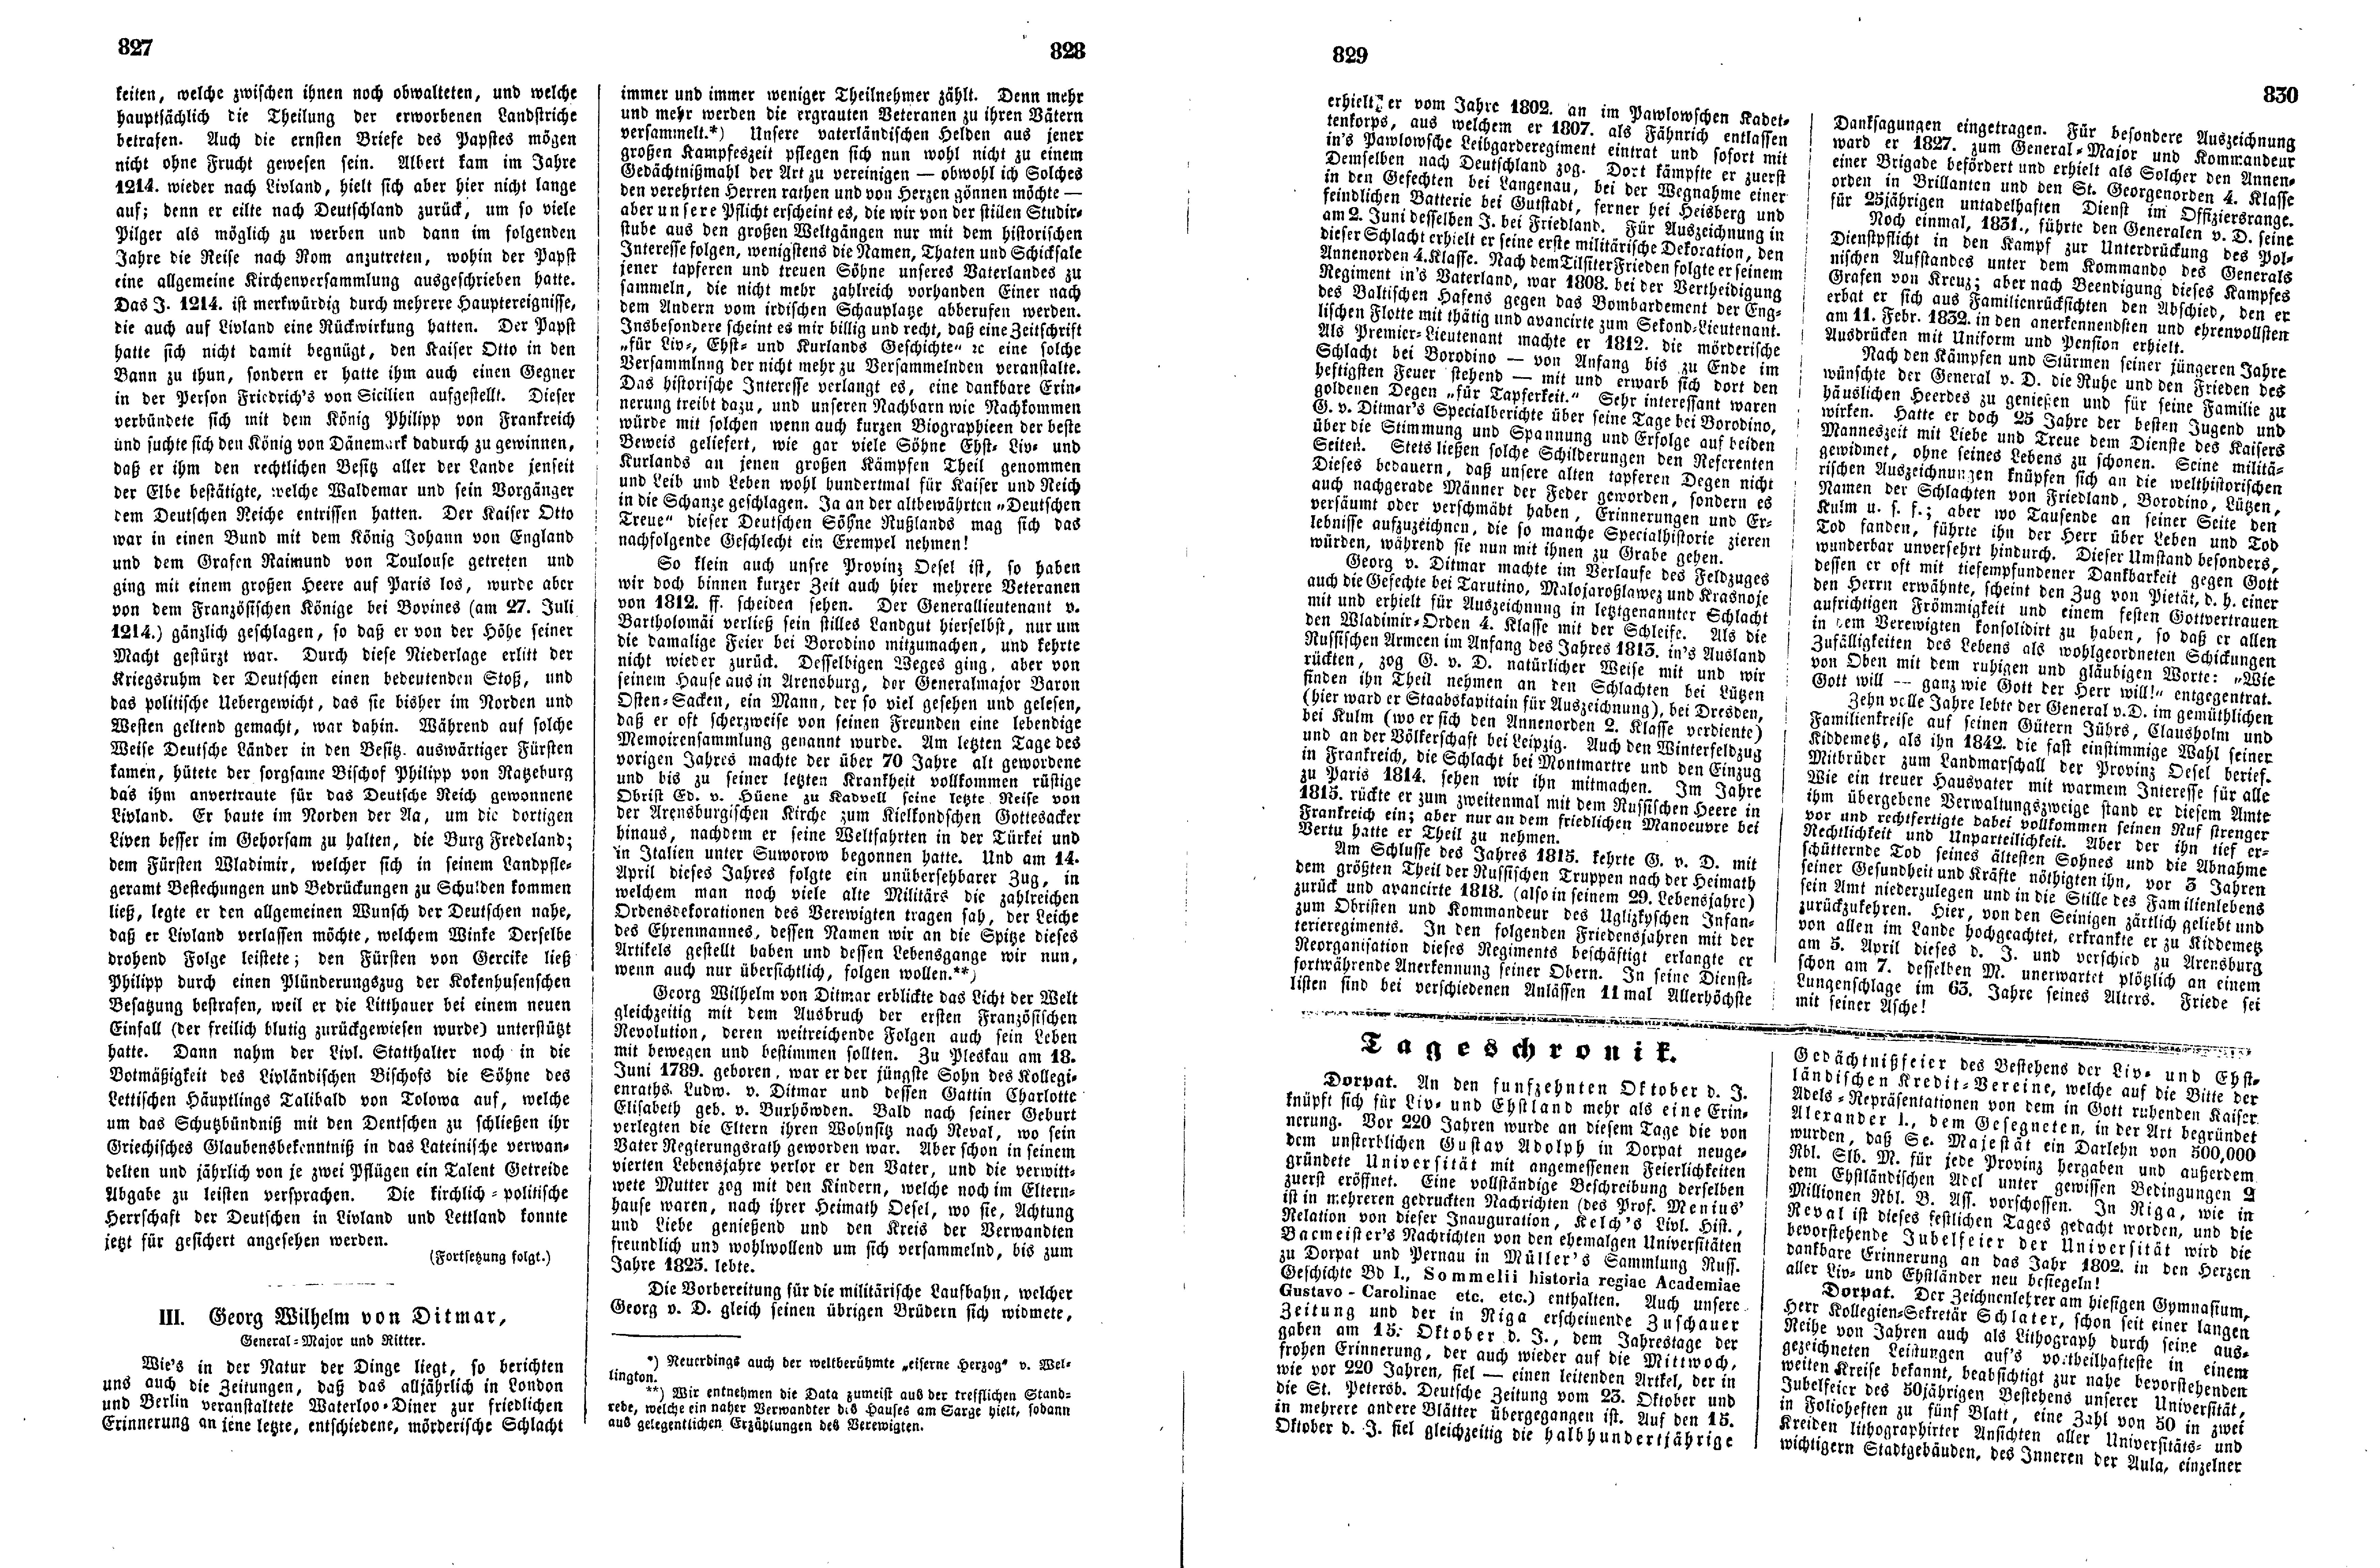 Das Inland [17] (1852) | 212. (827-830) Main body of text